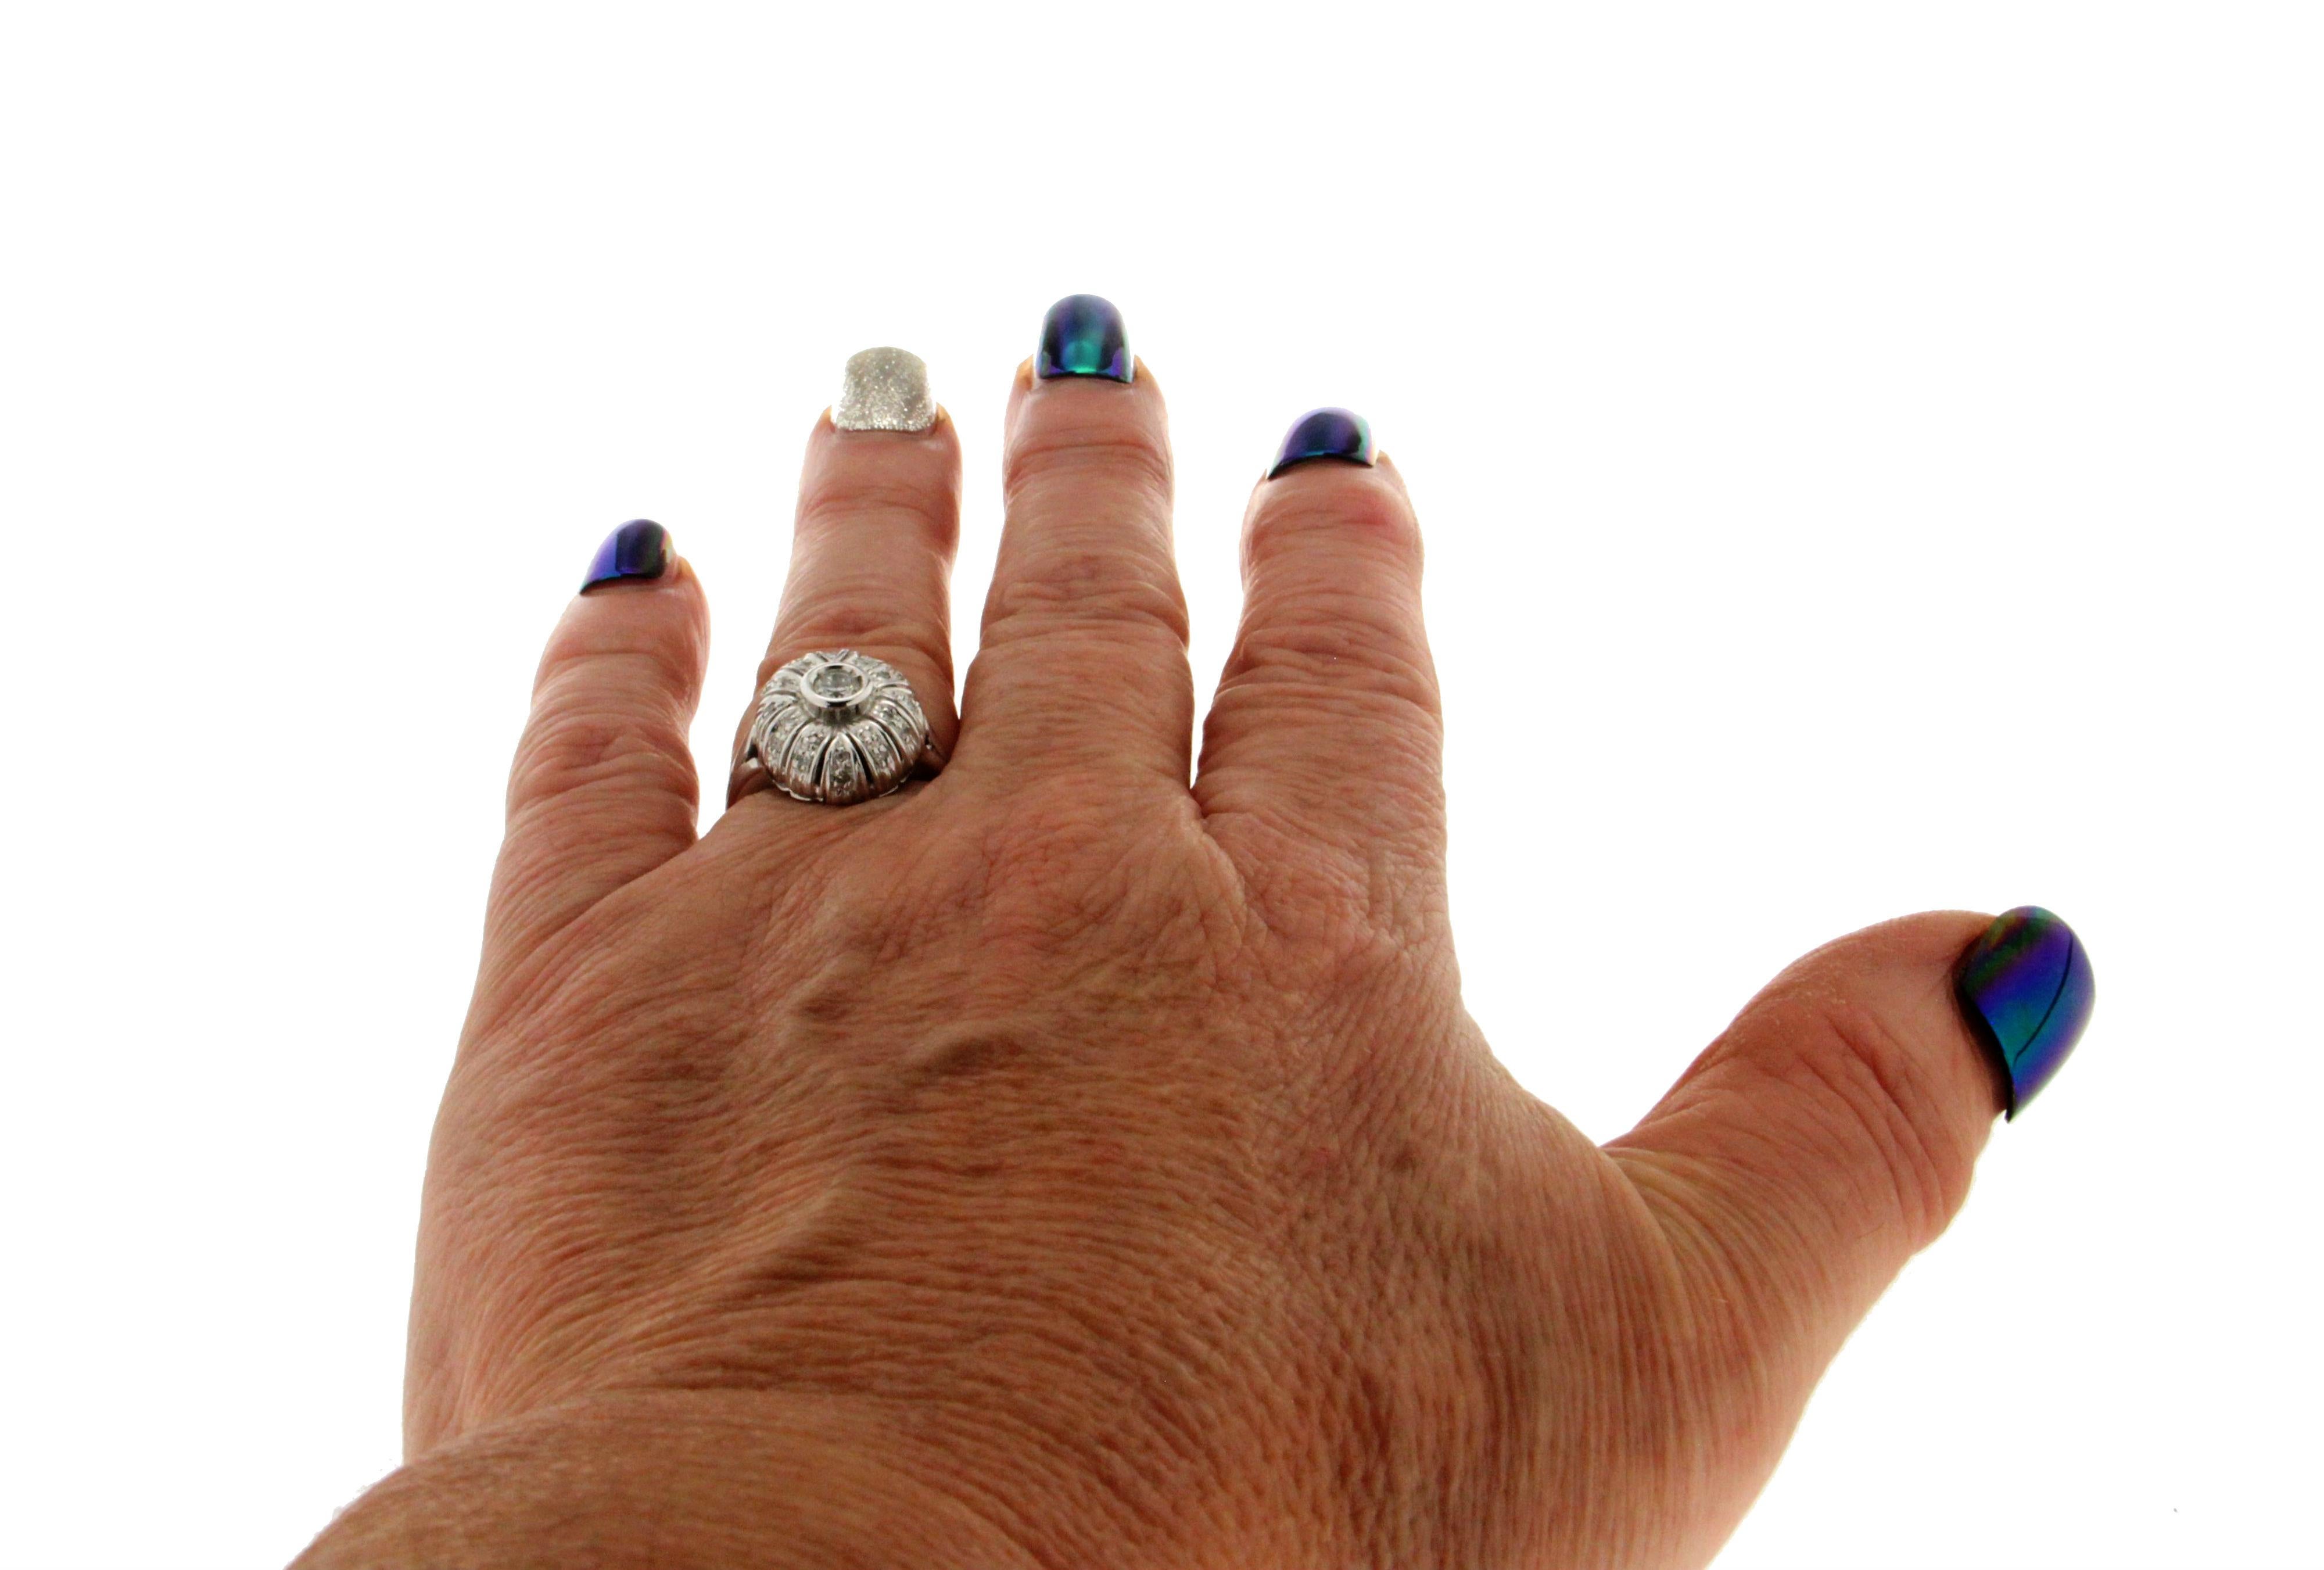 Handcraft Diamonds 18 Karat White Gold Engagement Ring 5